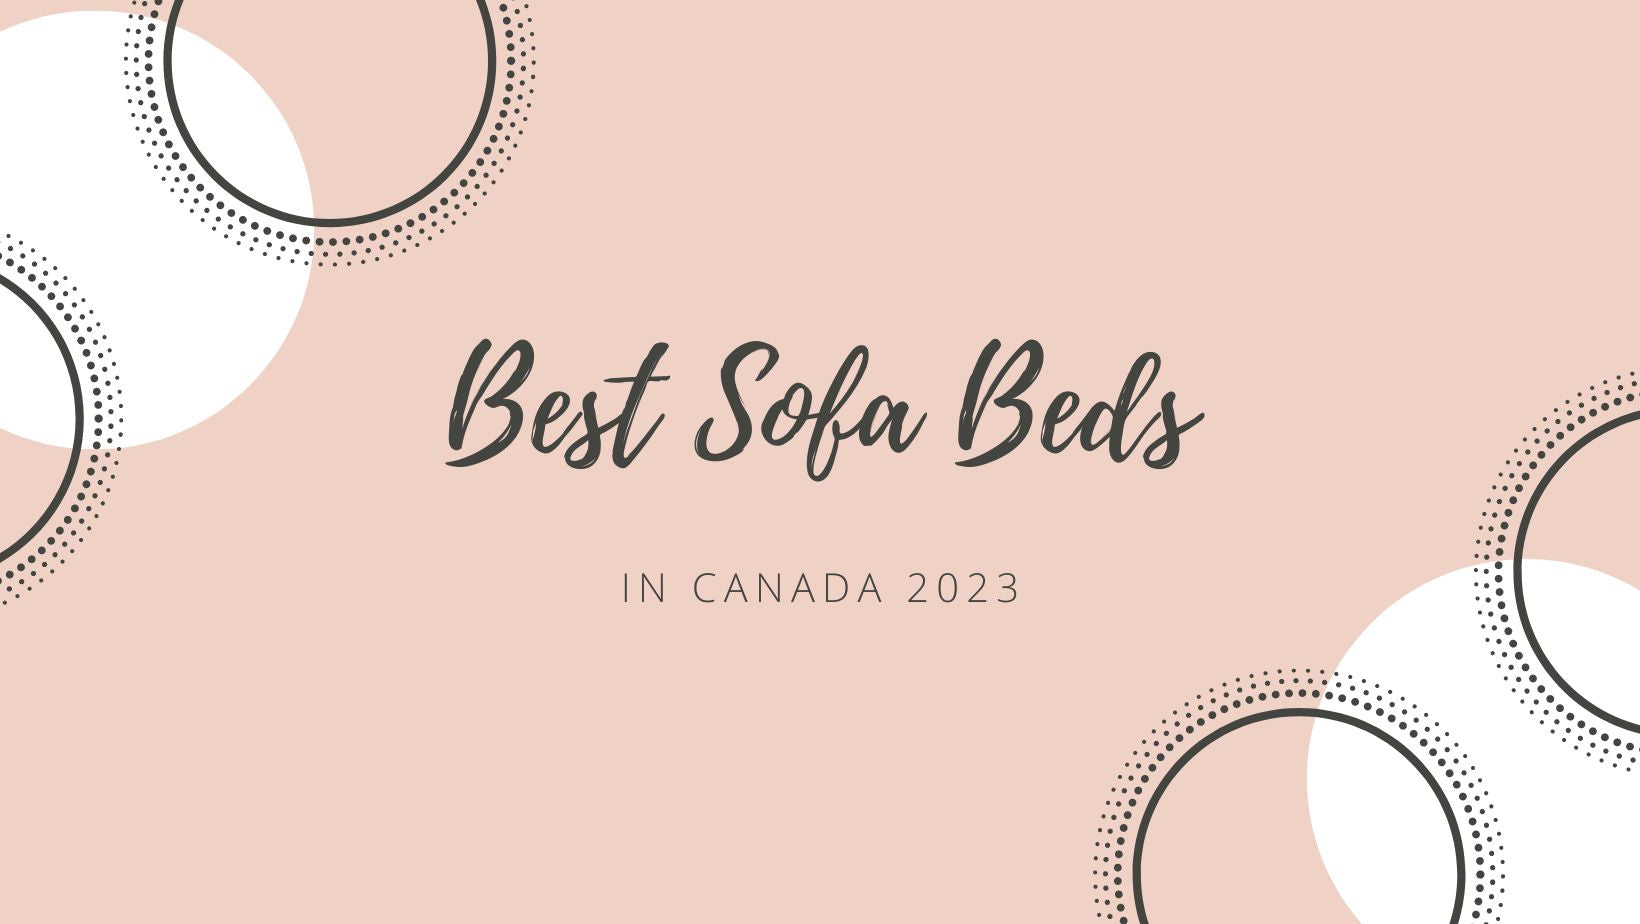 Top 5 Sofa Beds in Canada 2023